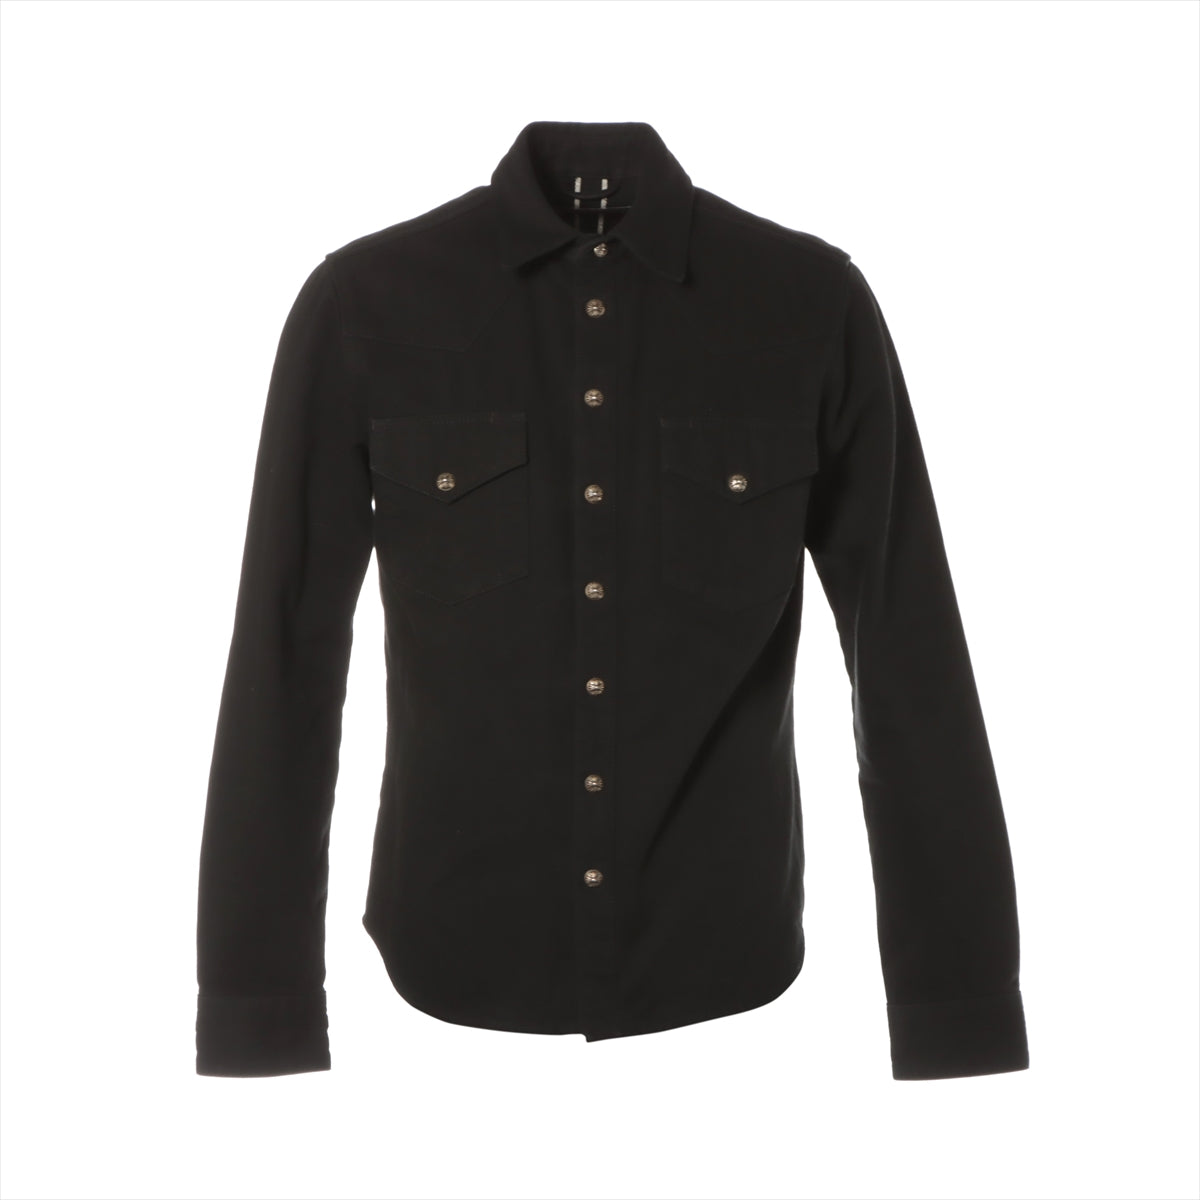 Chrome Hearts Cross ball Shirt Cotton JVP size SM Black × Silver Western shirt jacket